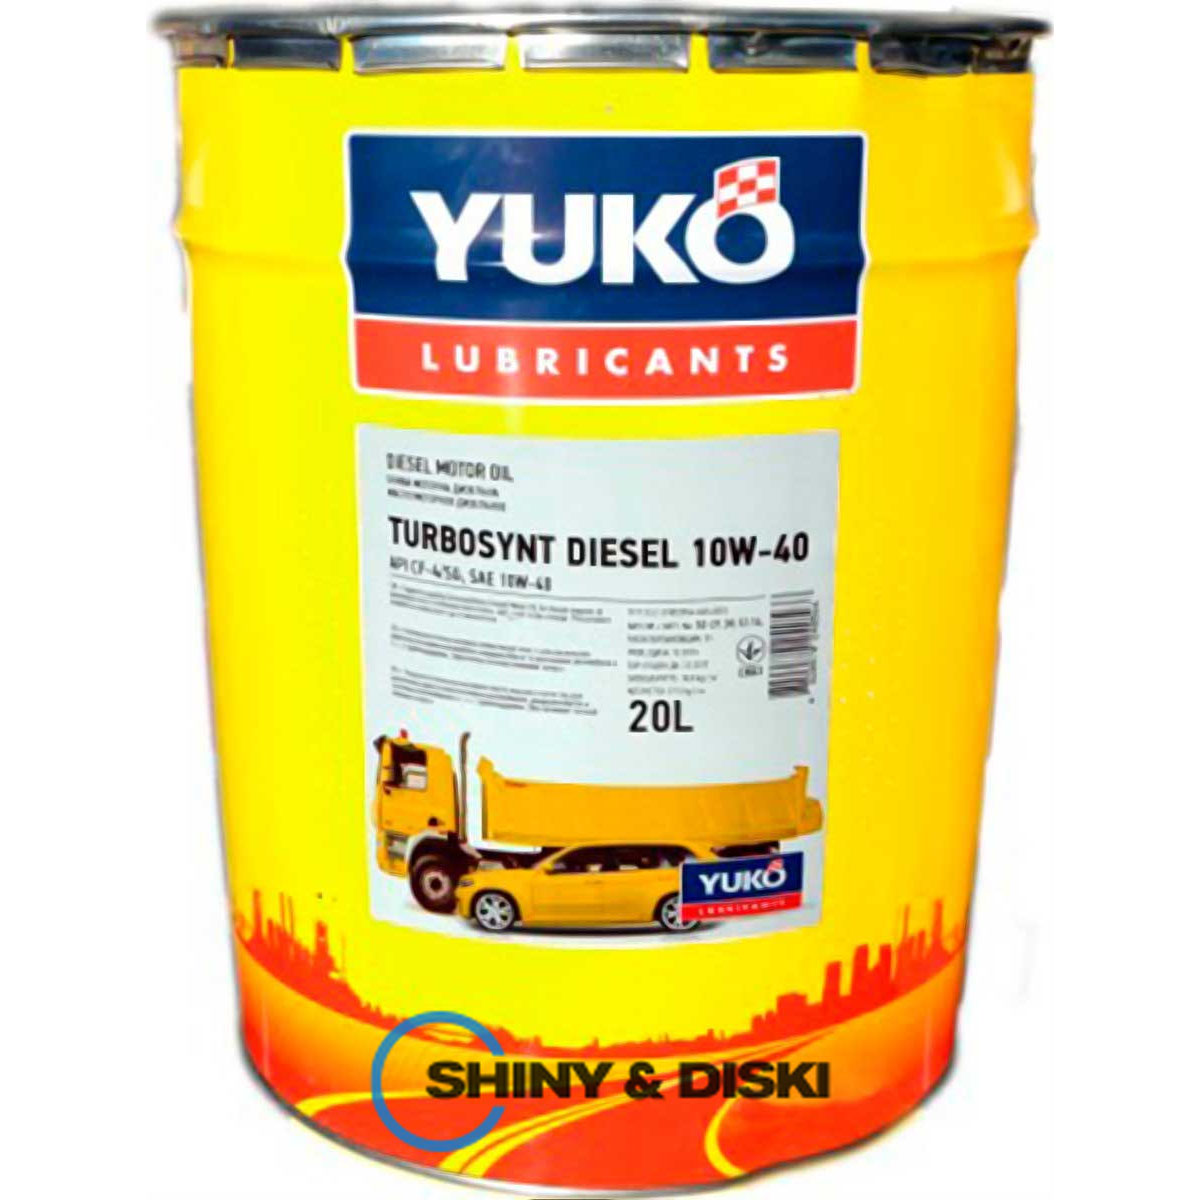 yuko turbosynt diesel 10w-40 (20л)